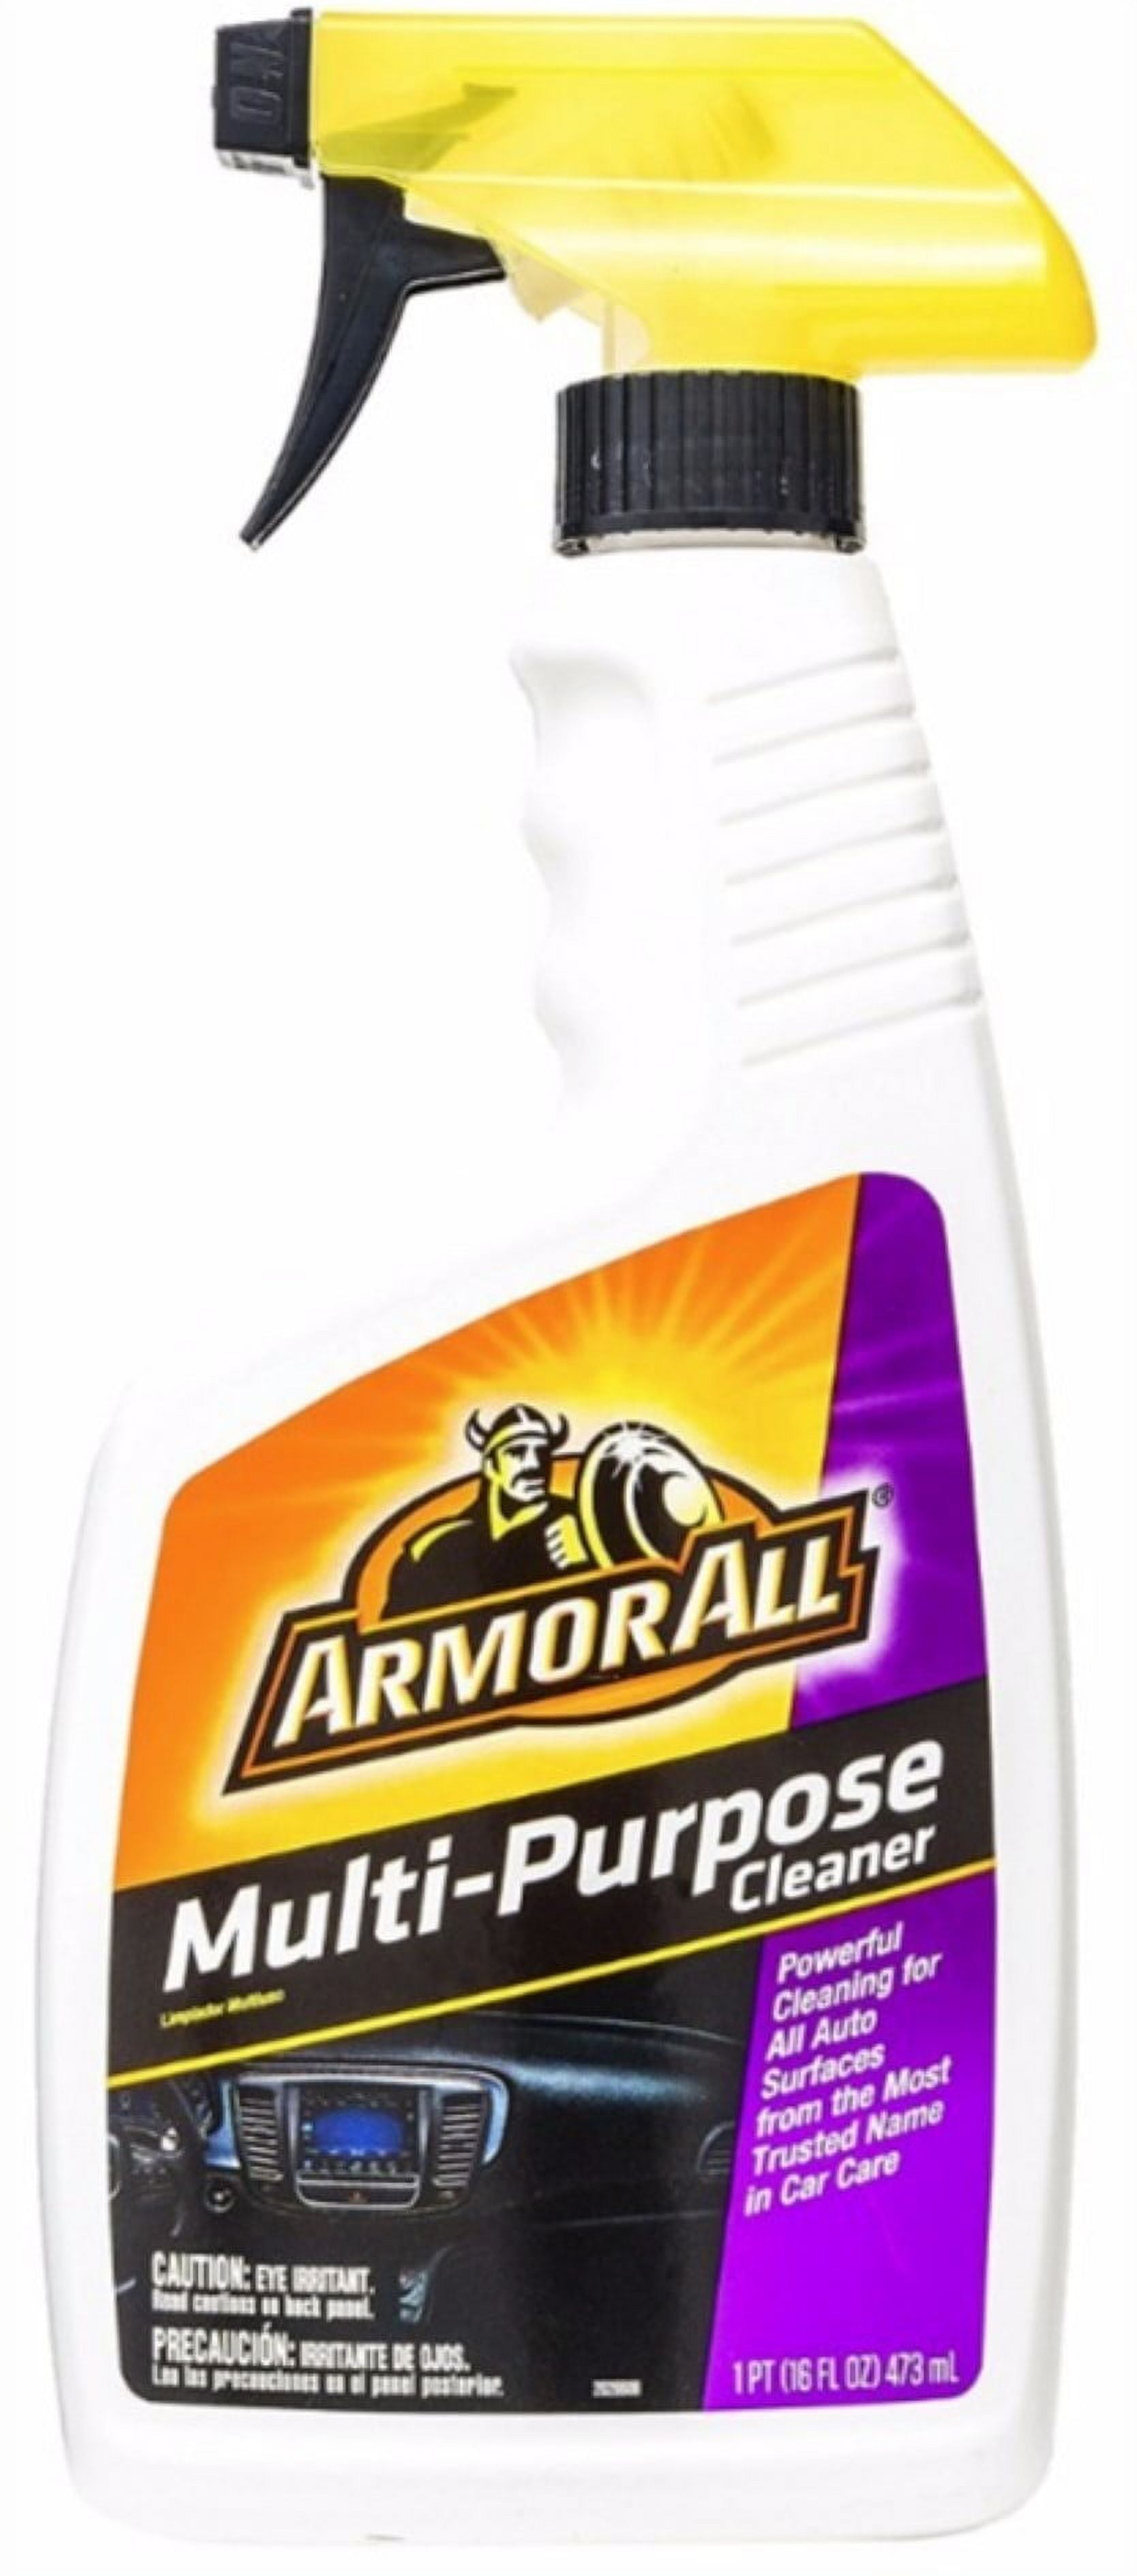 ArmorAll Multi Purpurpose Cleaner, 20 Oz.